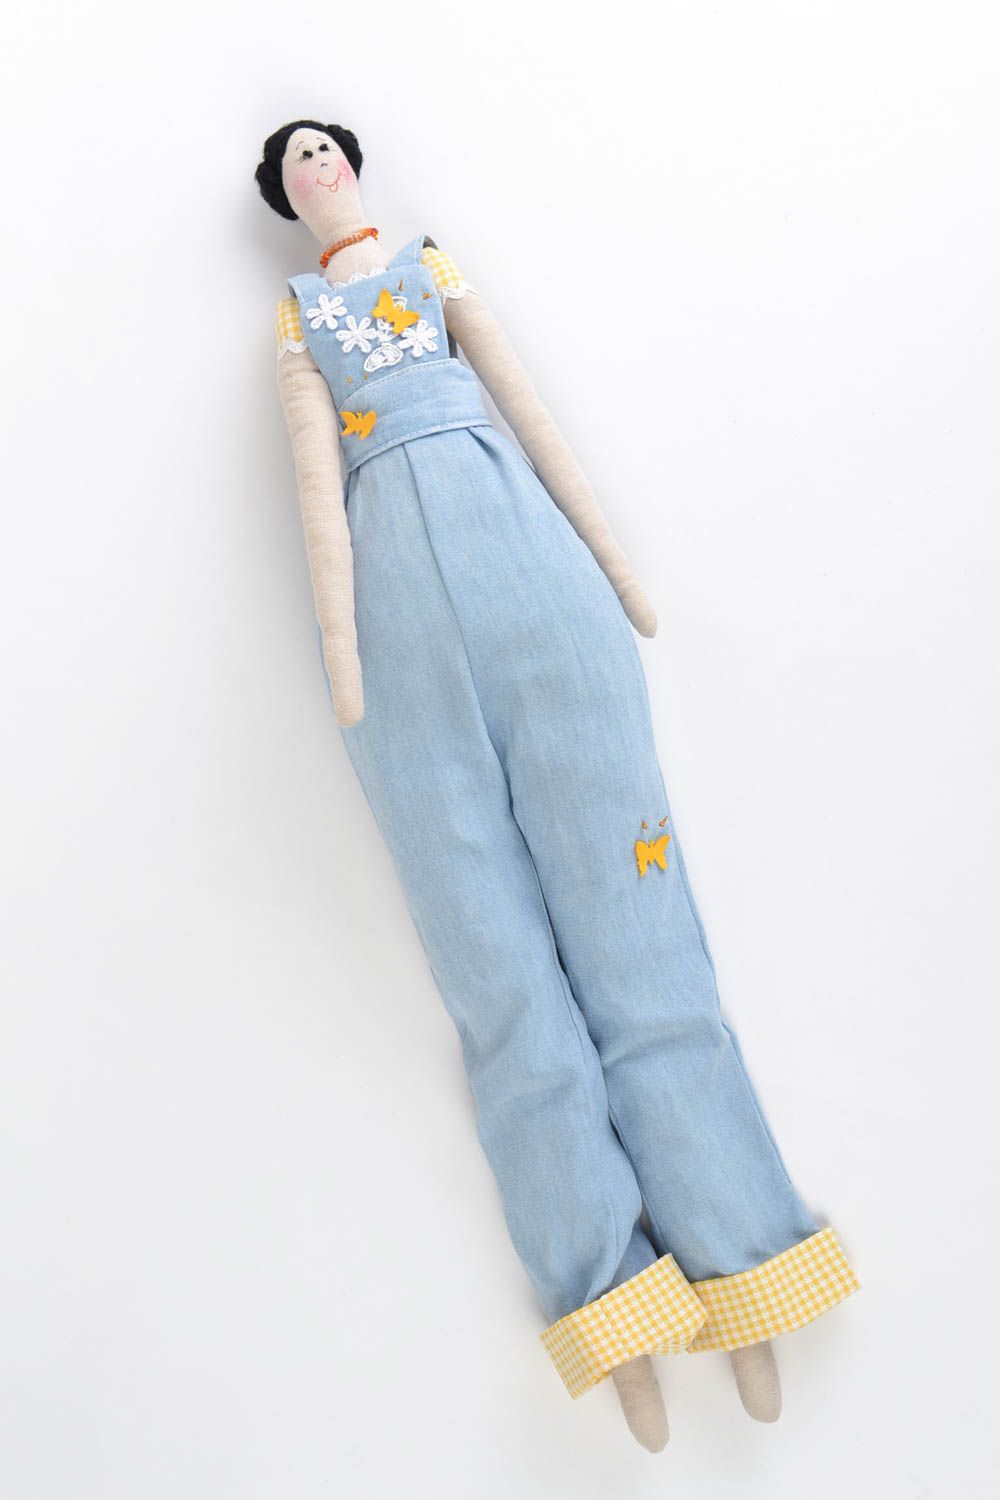 Designer handmade doll made of natural fabrics beautiful toy for children photo 3